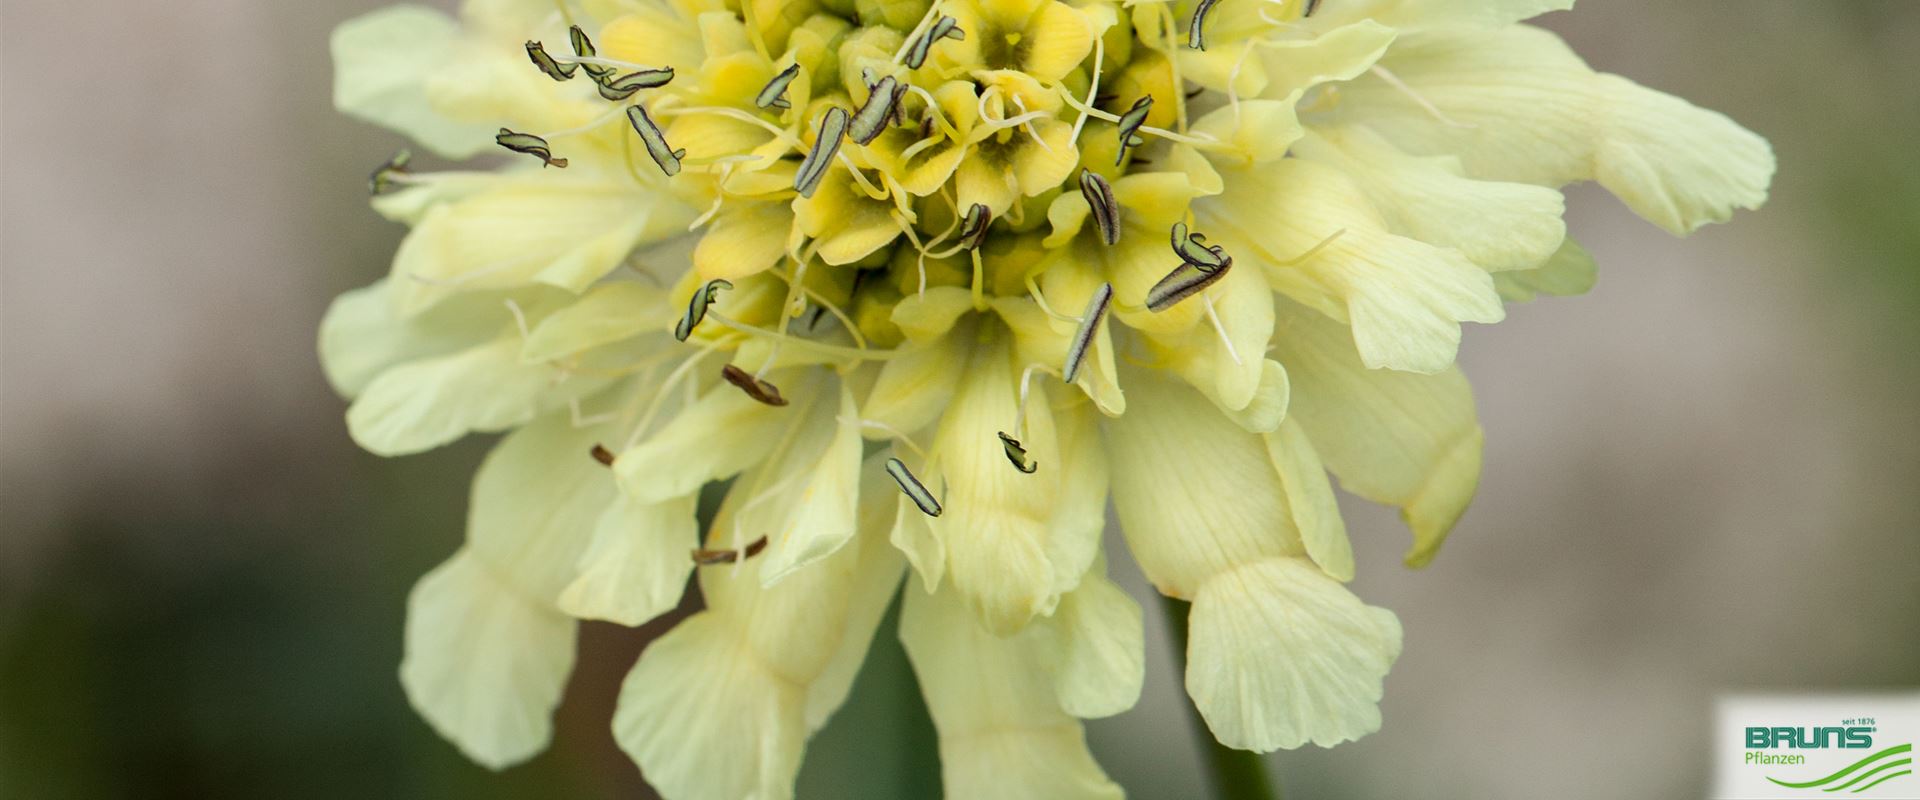 Scabiosa ochroleuca, Pale-yellow Scabious von Bruns Pflanzen